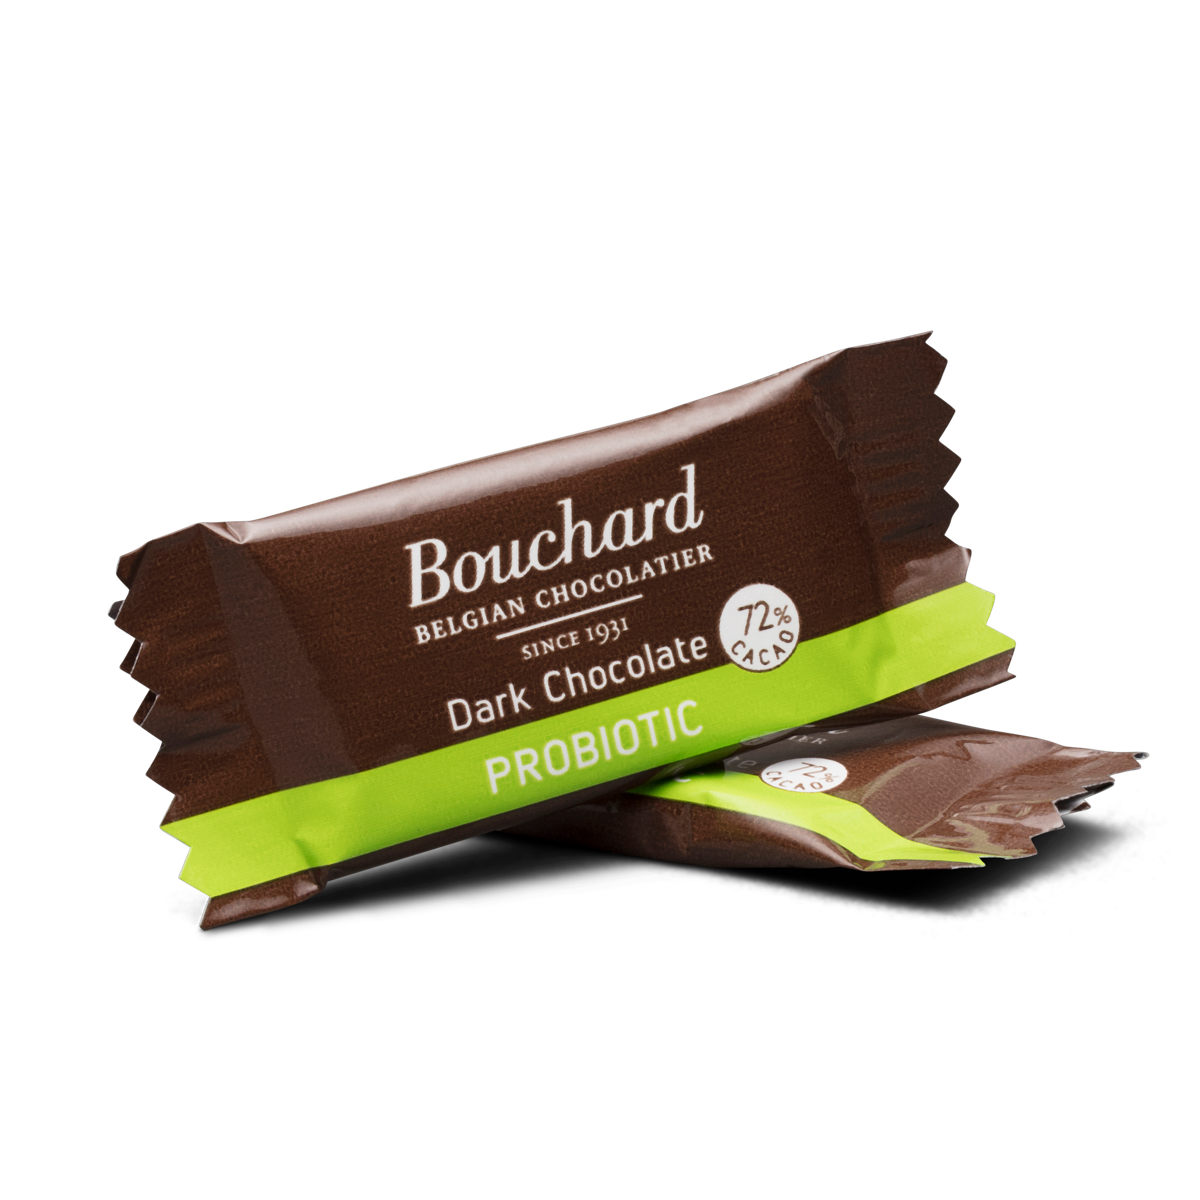 NEW TRIAL SIZE! Bouchard Probiotic Dark Belgian Chocolate (72% Cacao)